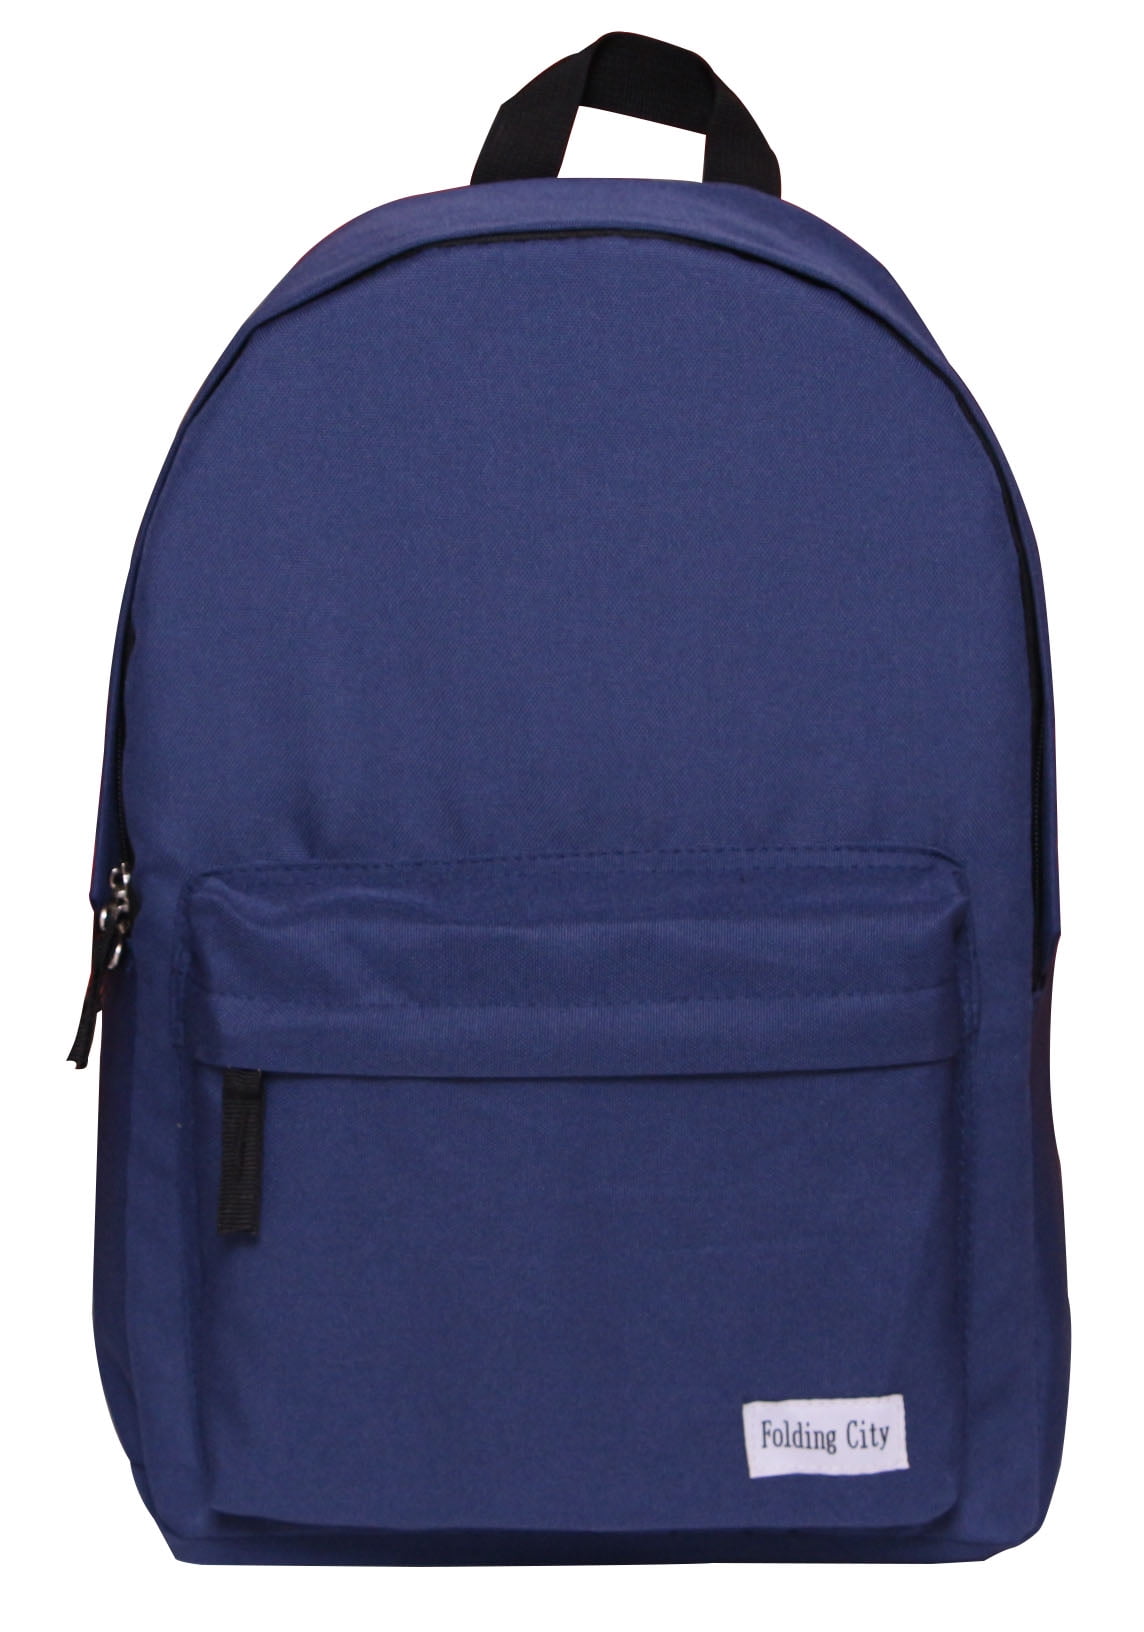 Backpack For Men Teenagers Lightweight Roomy School Bag Deep Blue ...